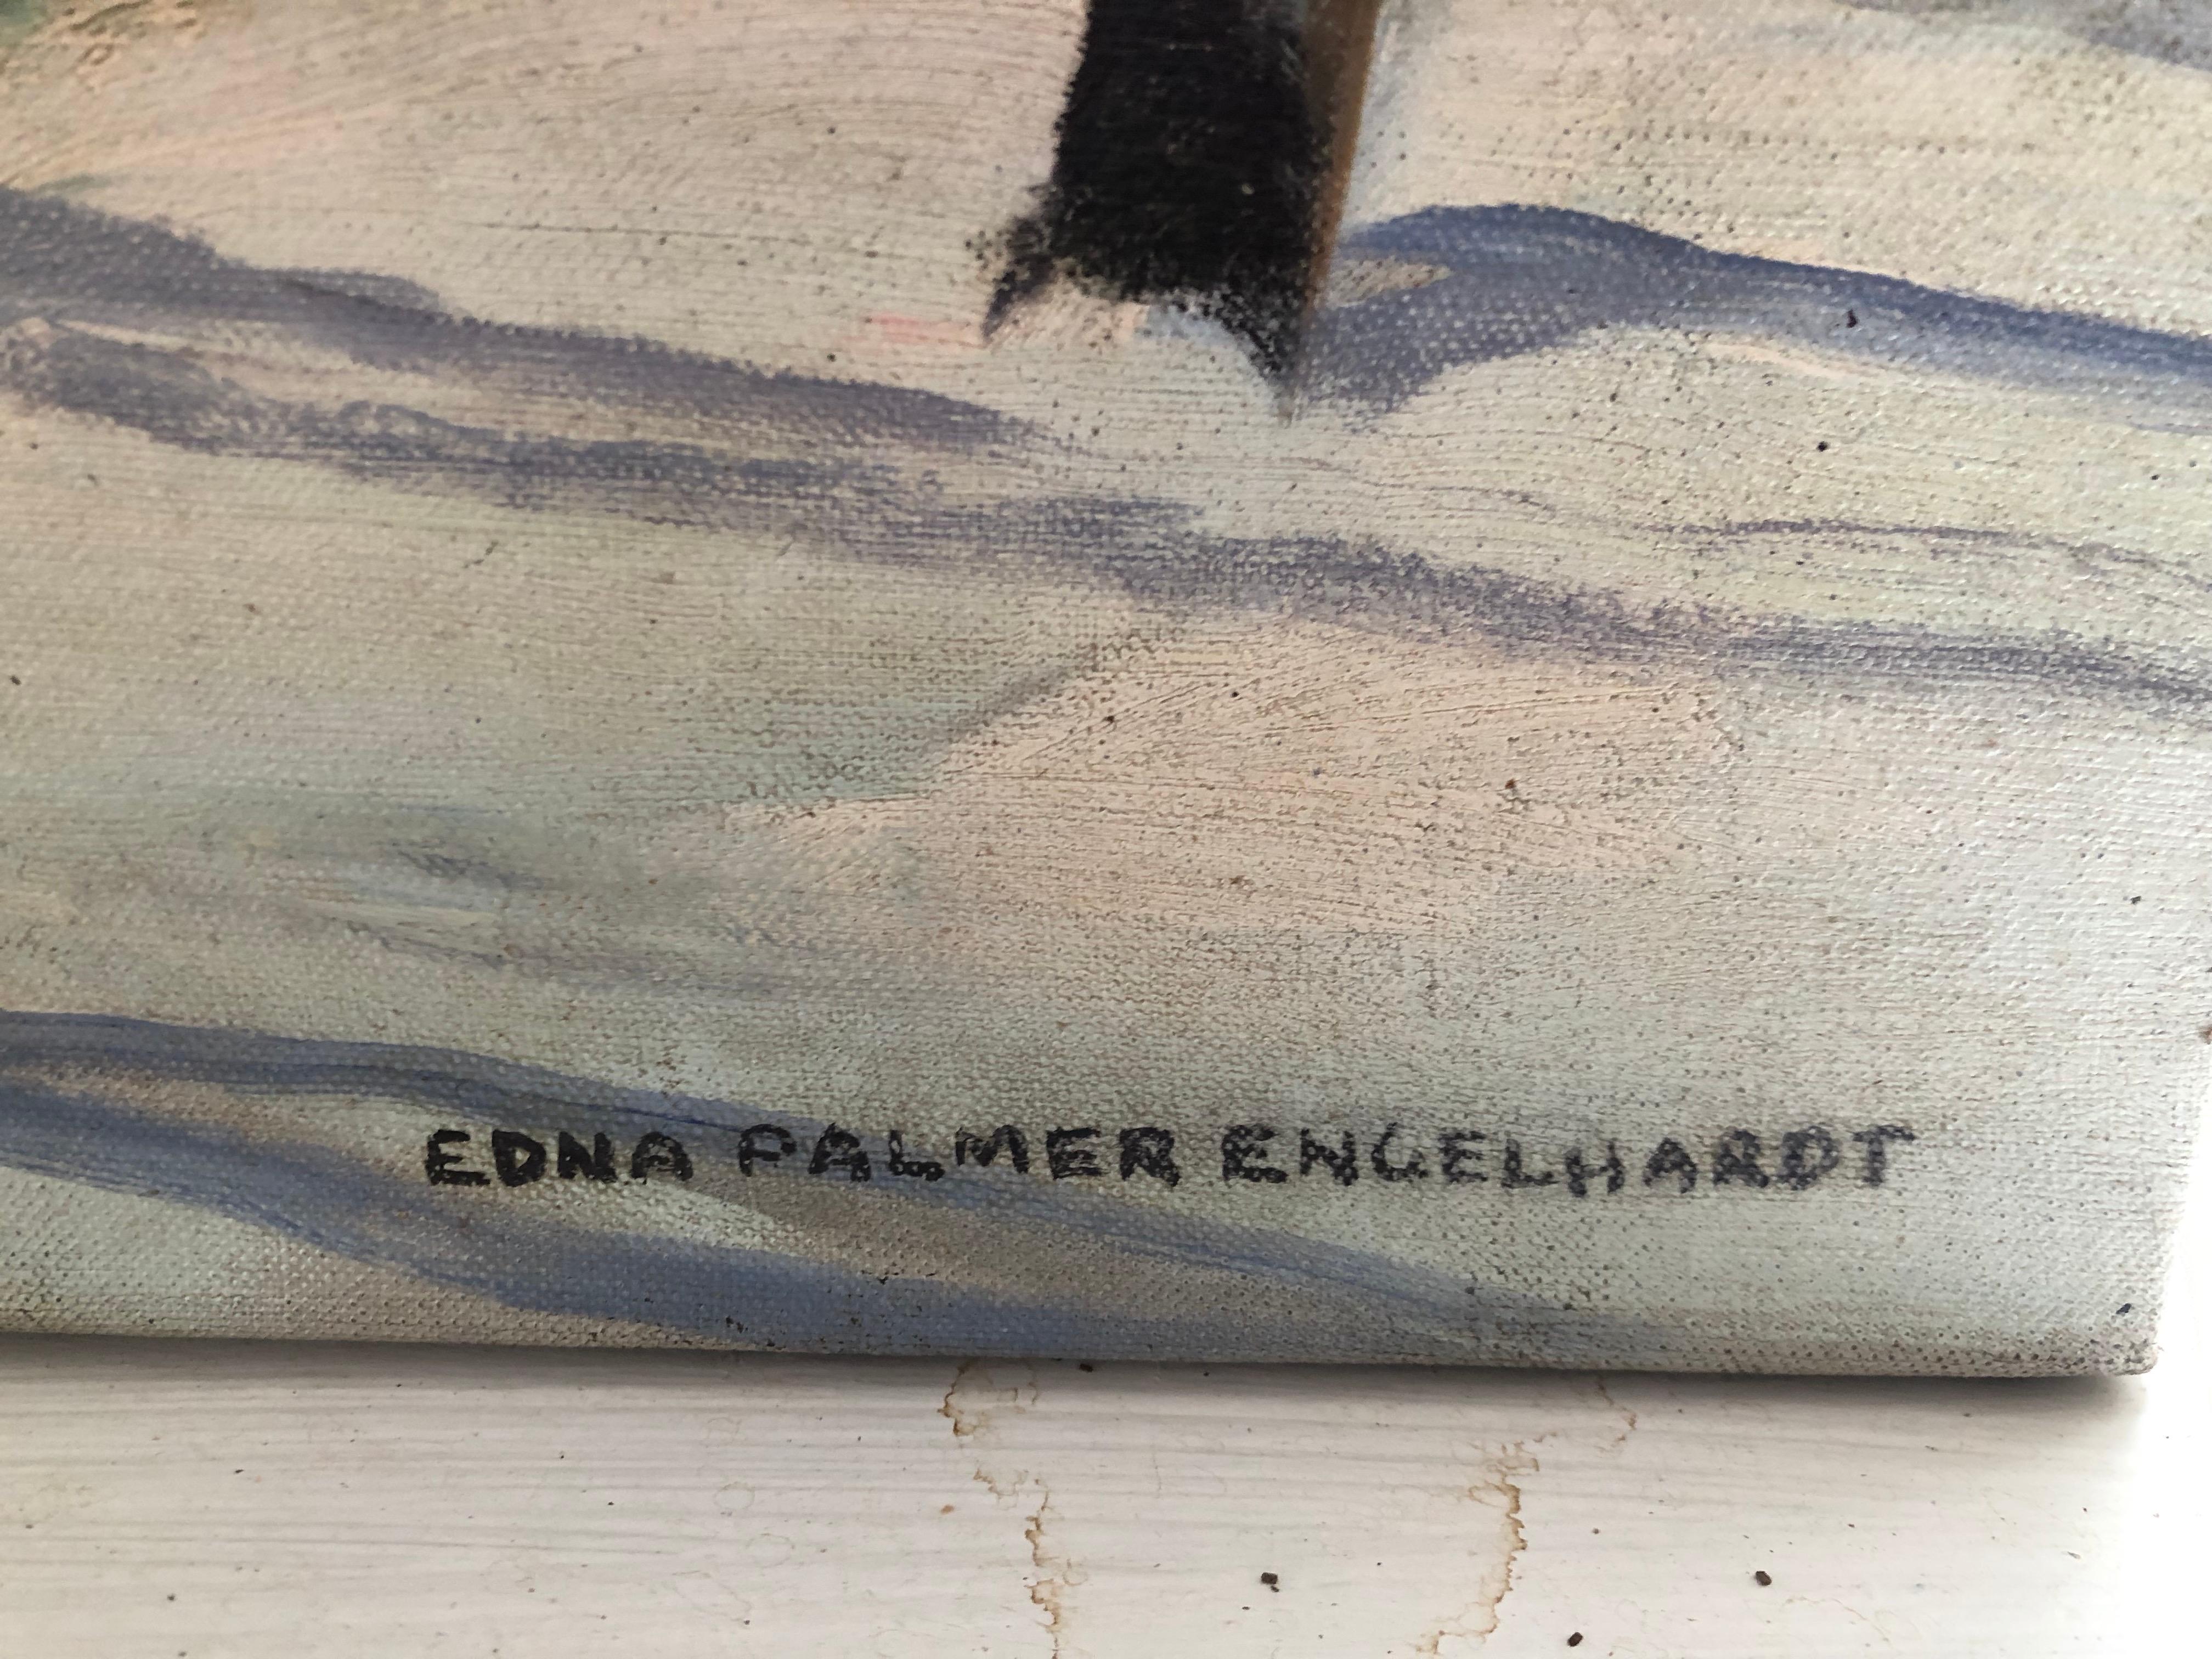 American Classical Edna Engelhardt 